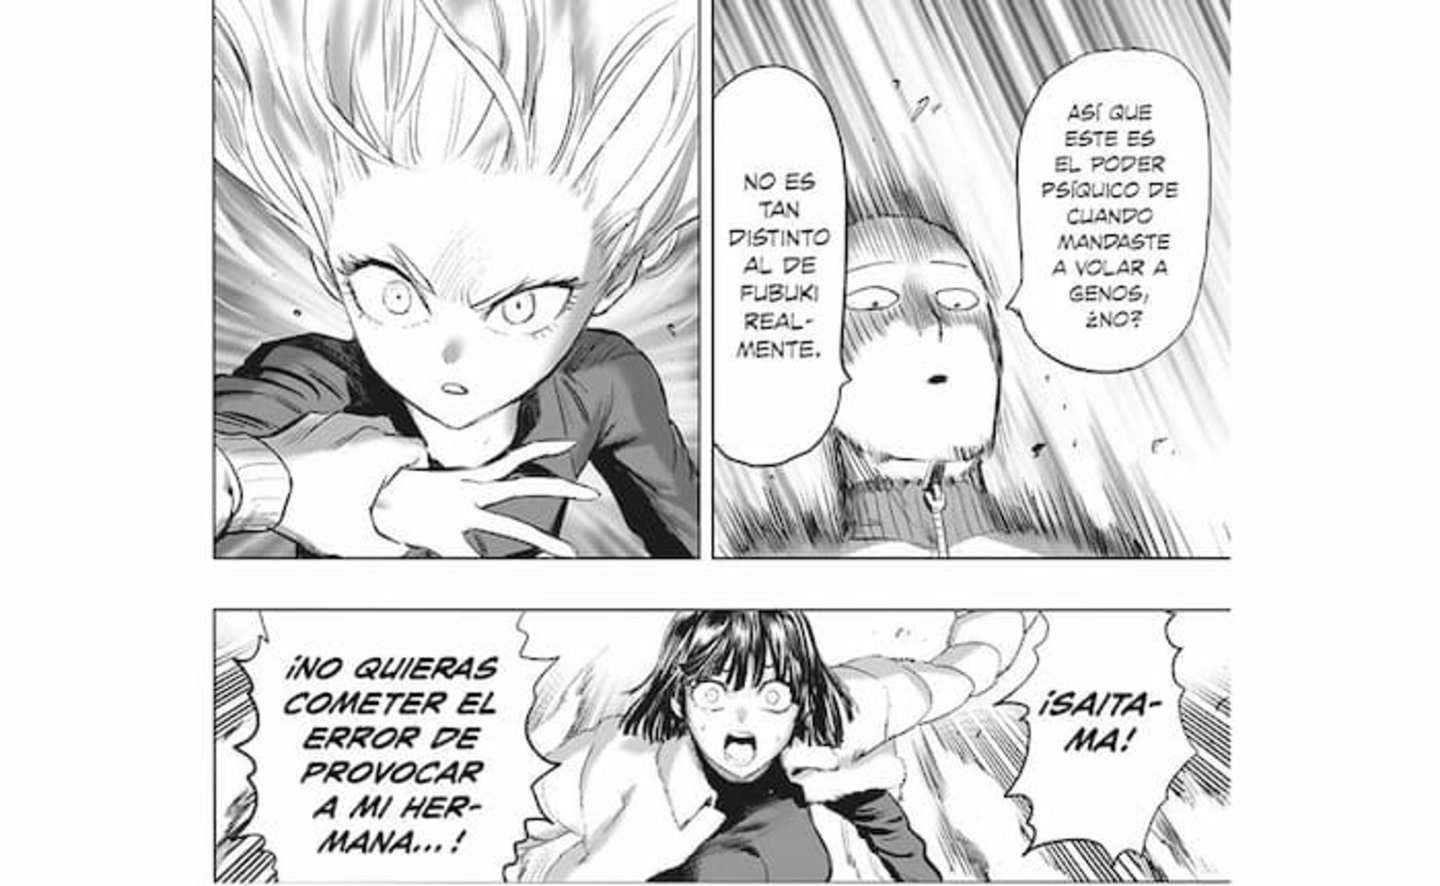 Saitama comparando los poderes de Tatsumaki y su hermana, Fubuki